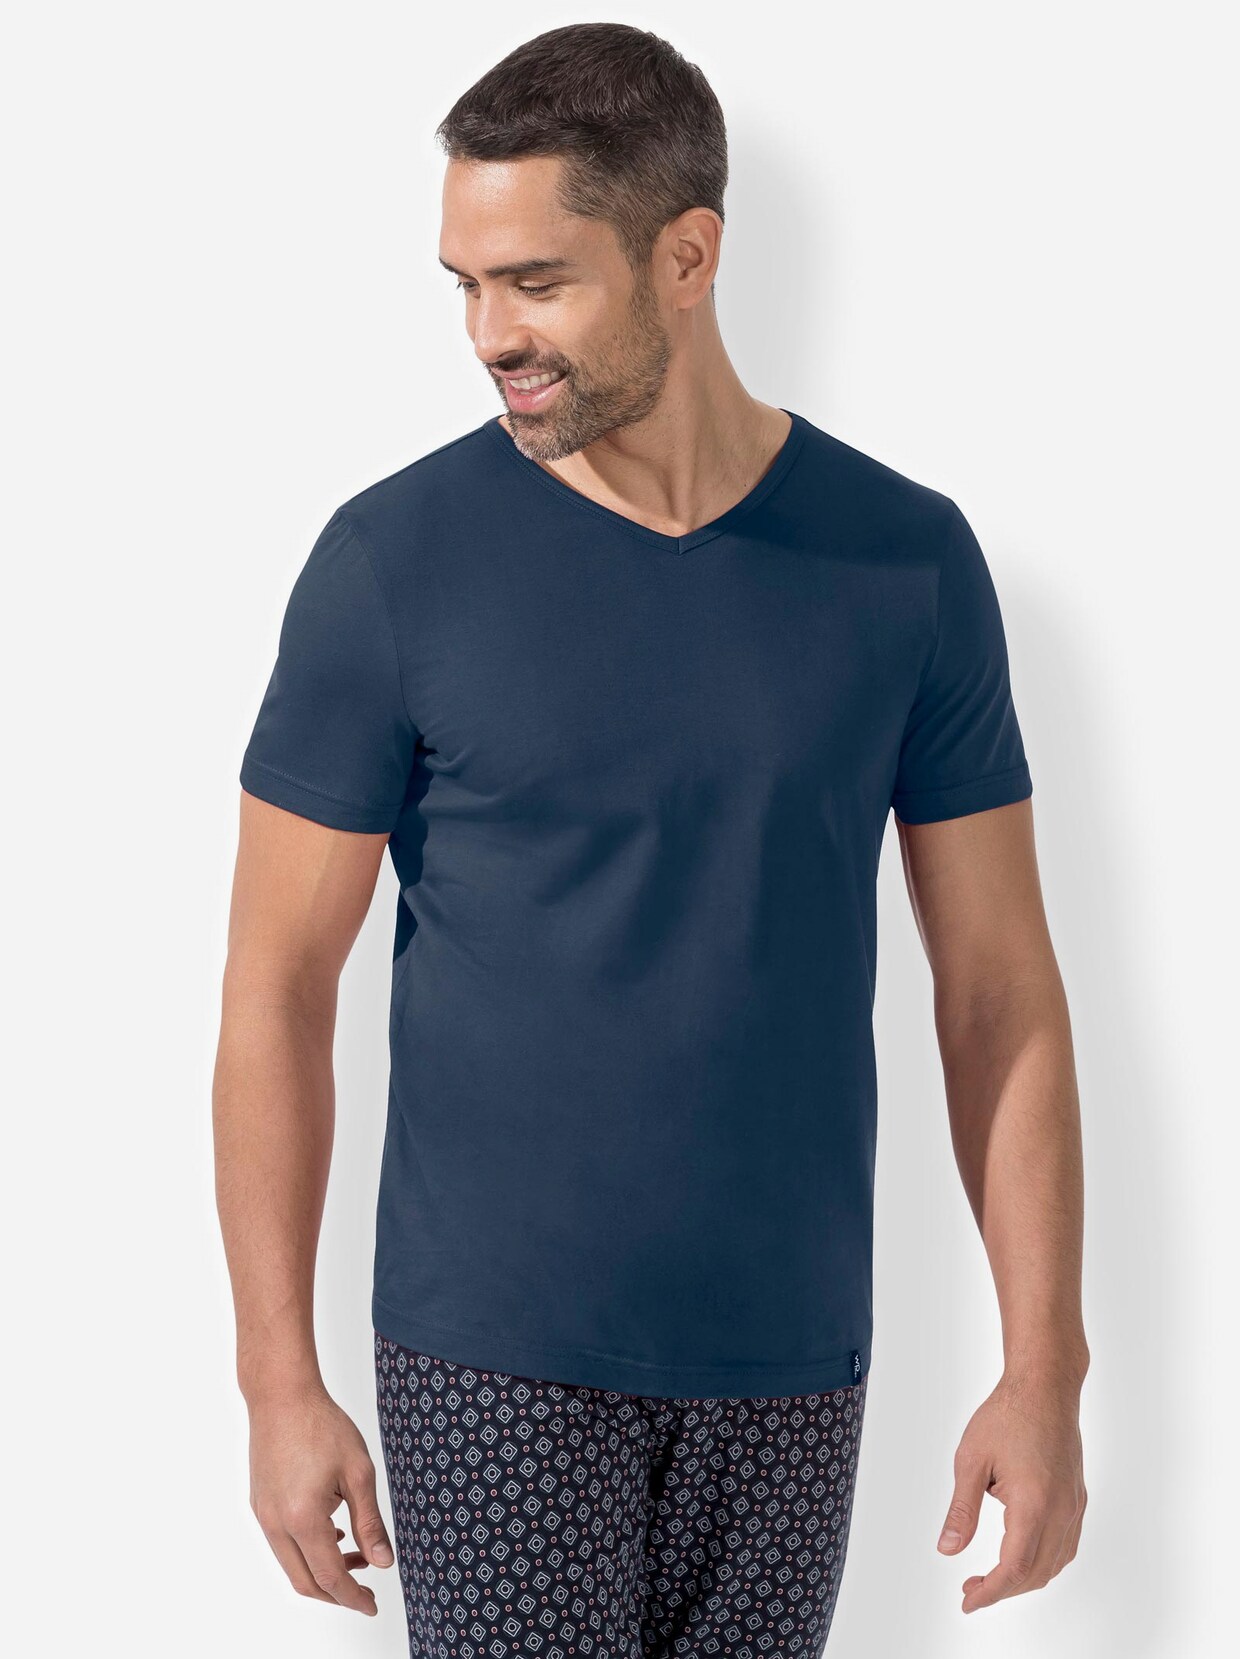 wäschepur Shirt - bordeaux + dunkelblau